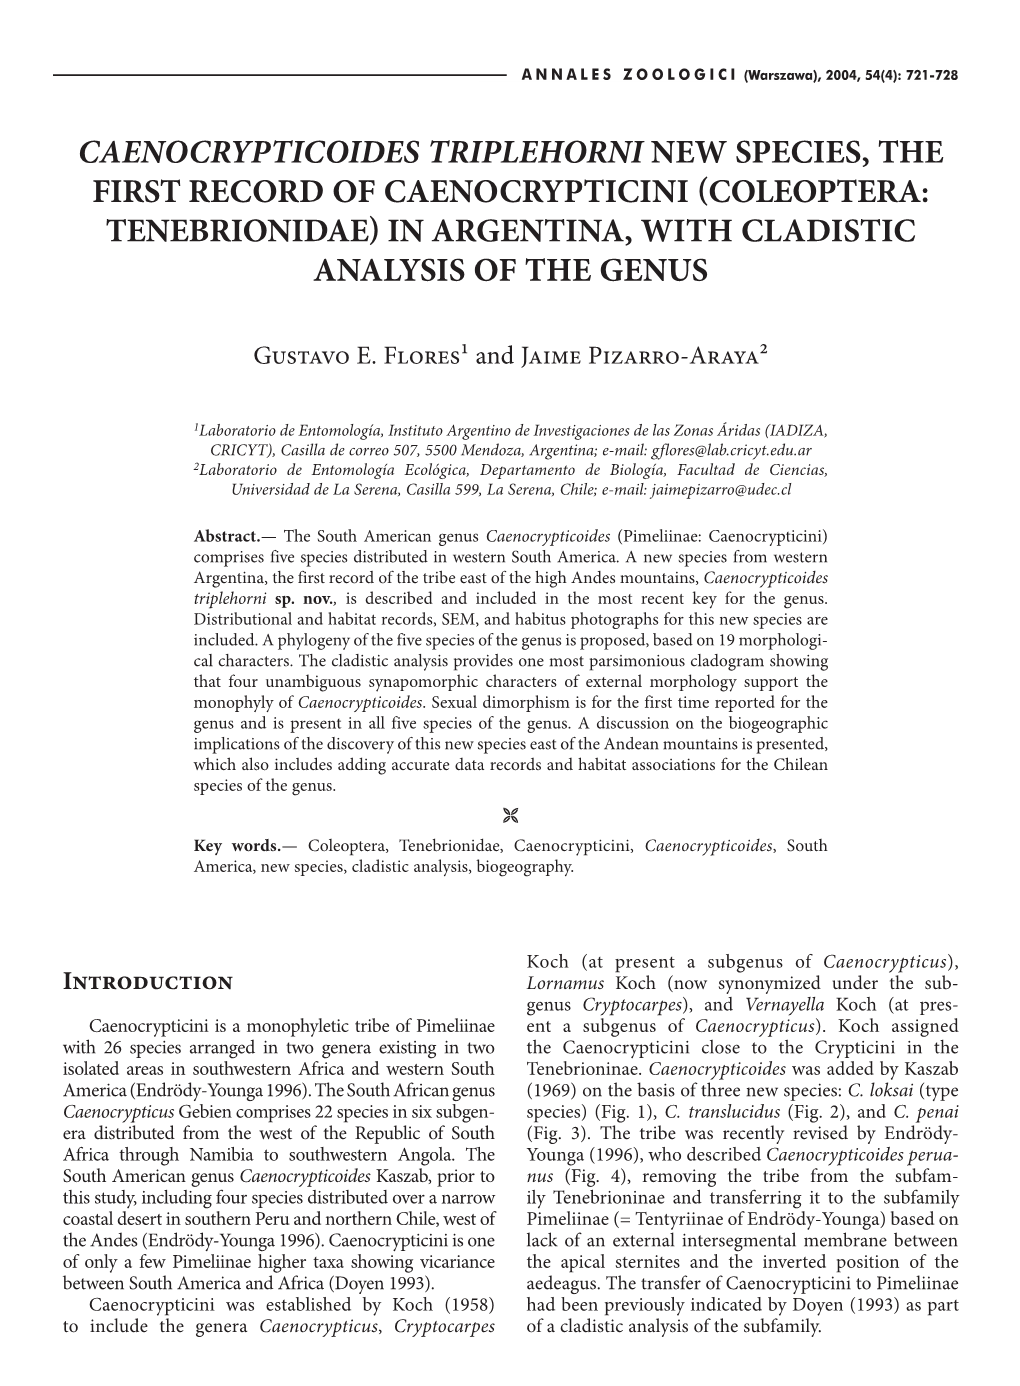 Caenocrypticoides Triplehorni New Species, the First Record of Caenocrypticini Coleoptera: Tenebrionidae in Argentina, with Cladistic Analysis of the Genus